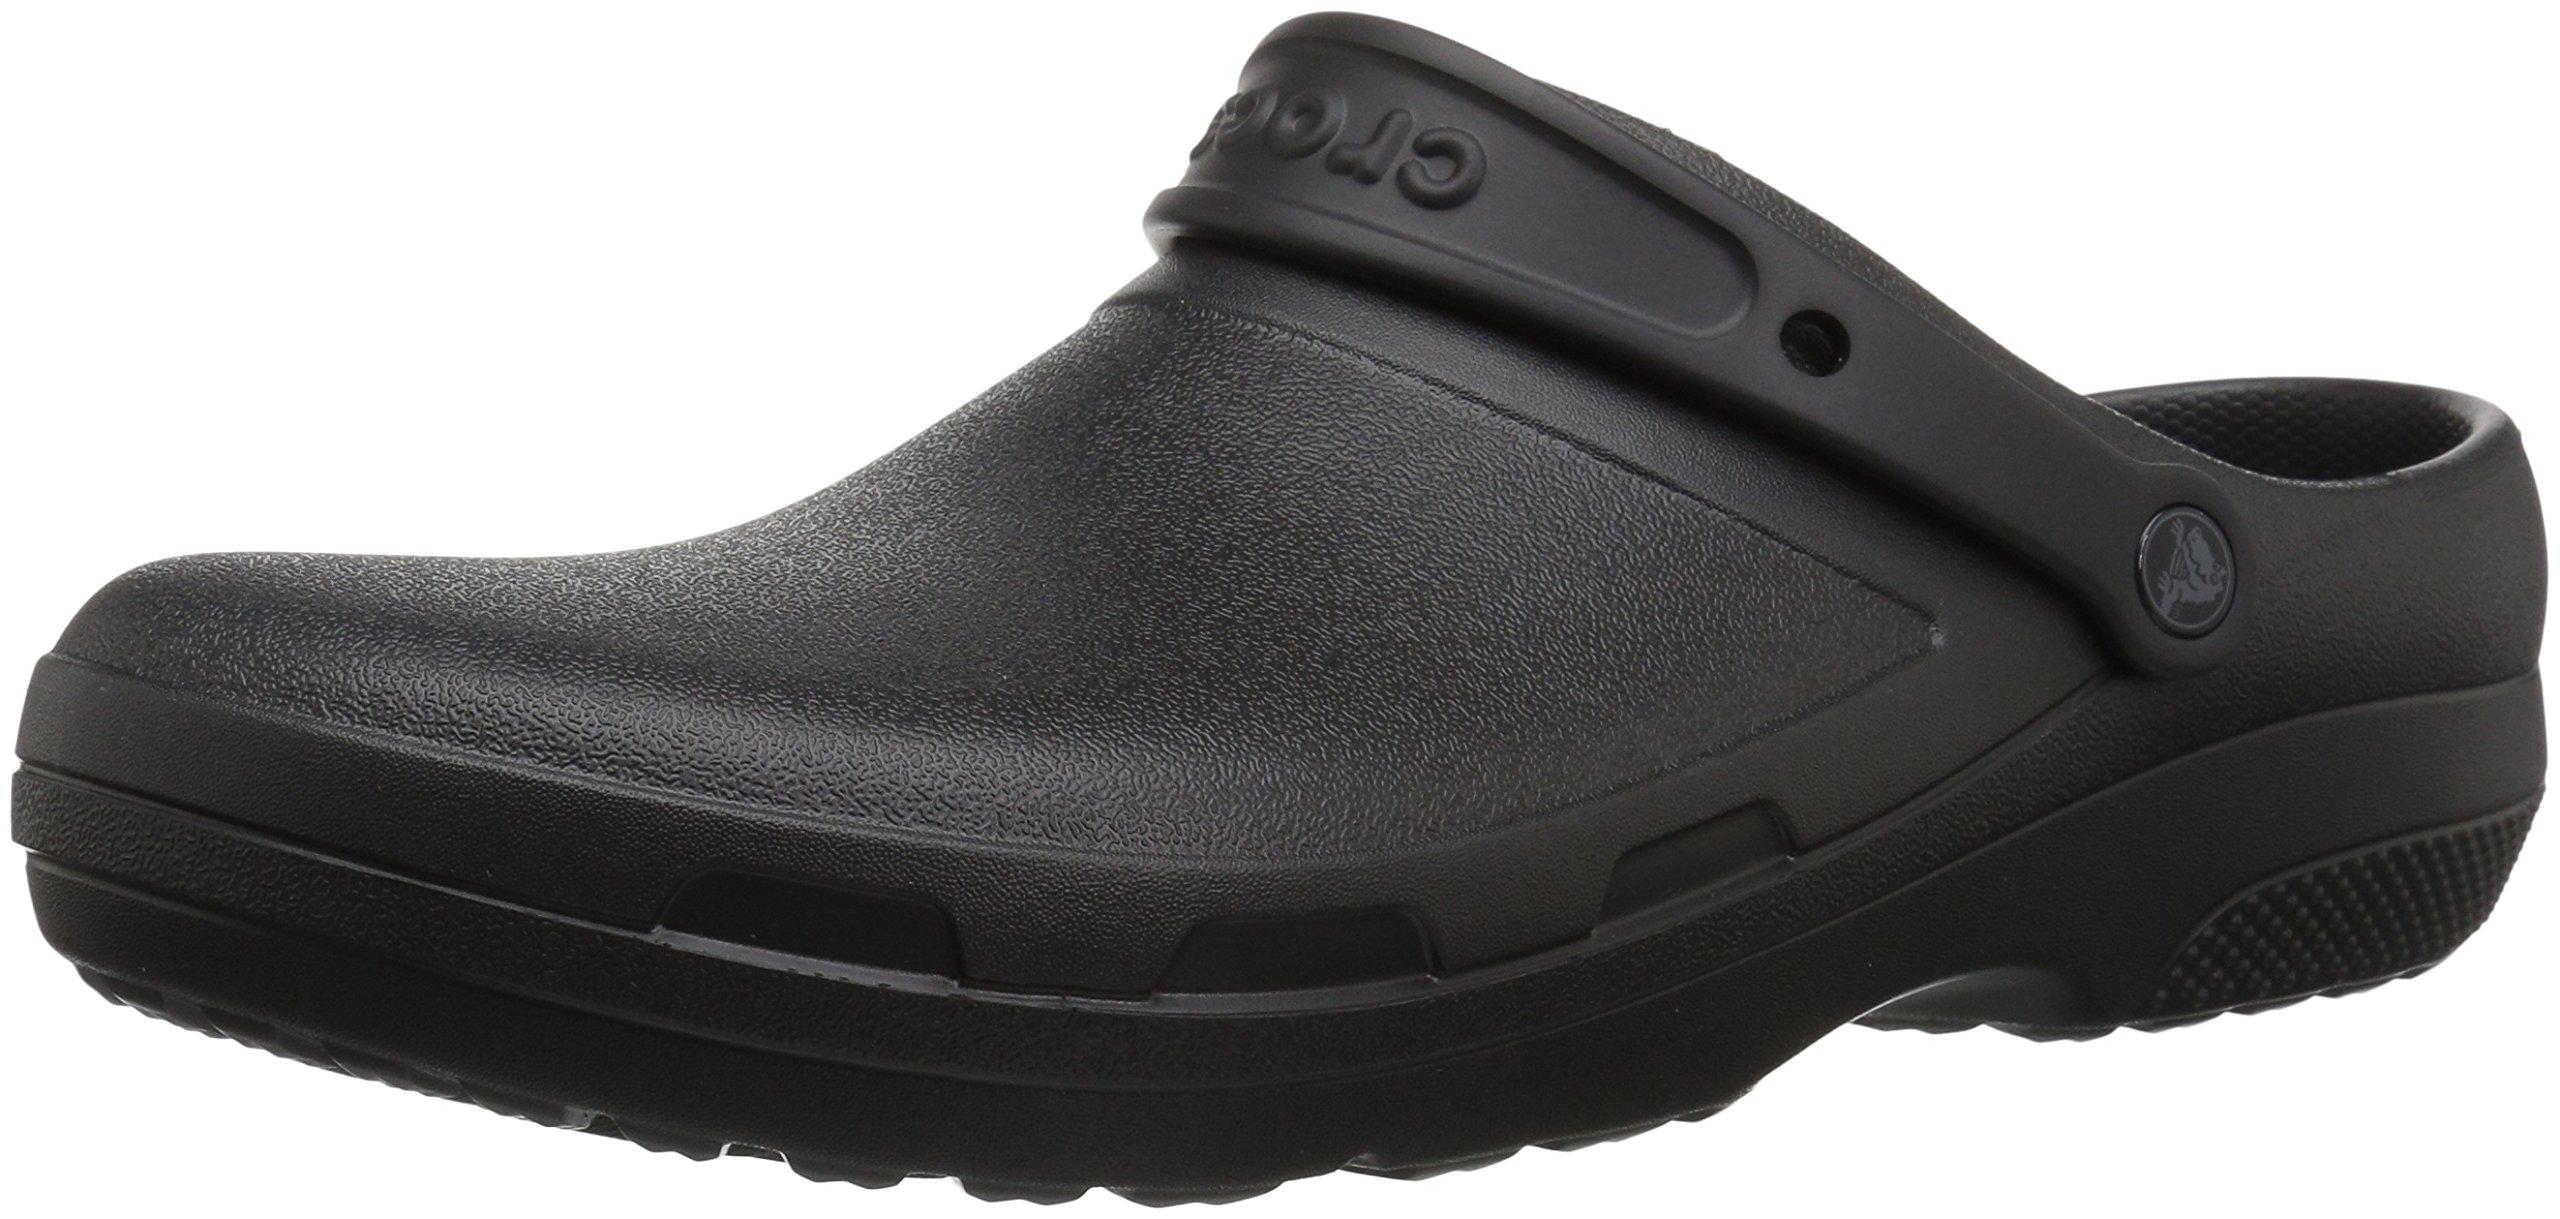 Crocs™ Specialist Ii Clog in Black 1 (Black) - Save 56% - Lyst